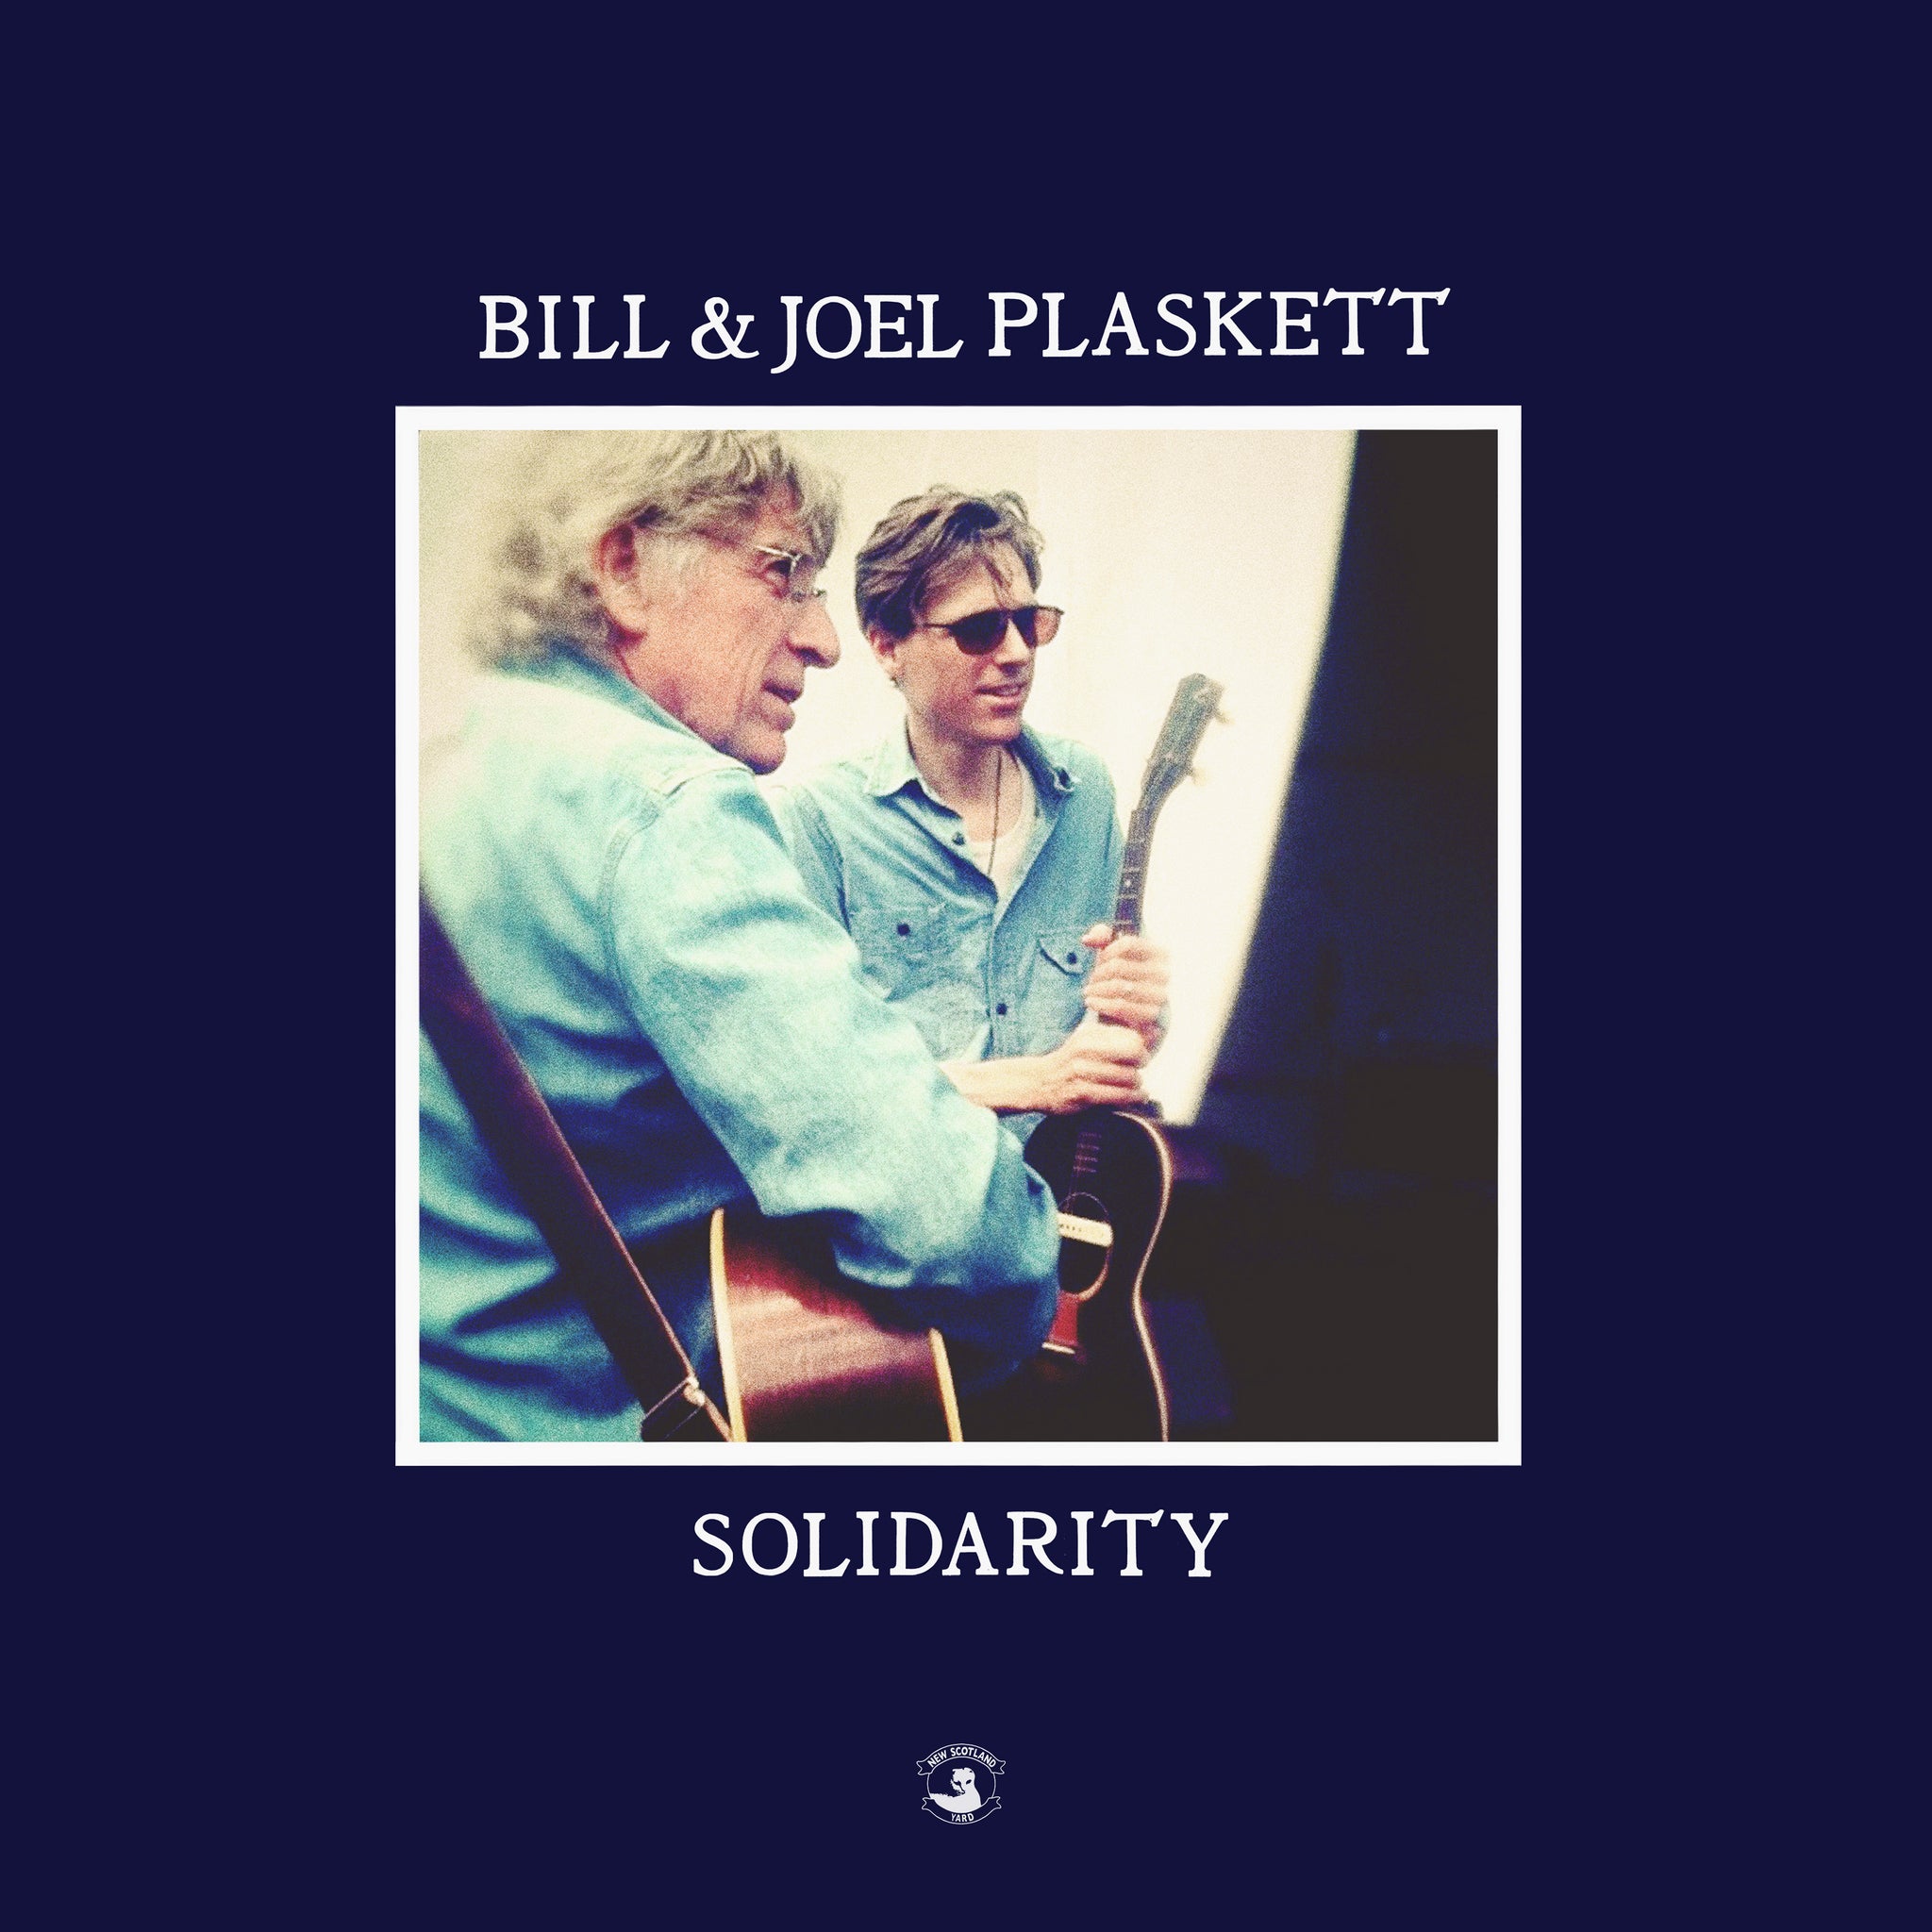 Joel Plaskett Solidarity album cover "Bill & Joel Plaskett" image of Joel and Dad on a navy background